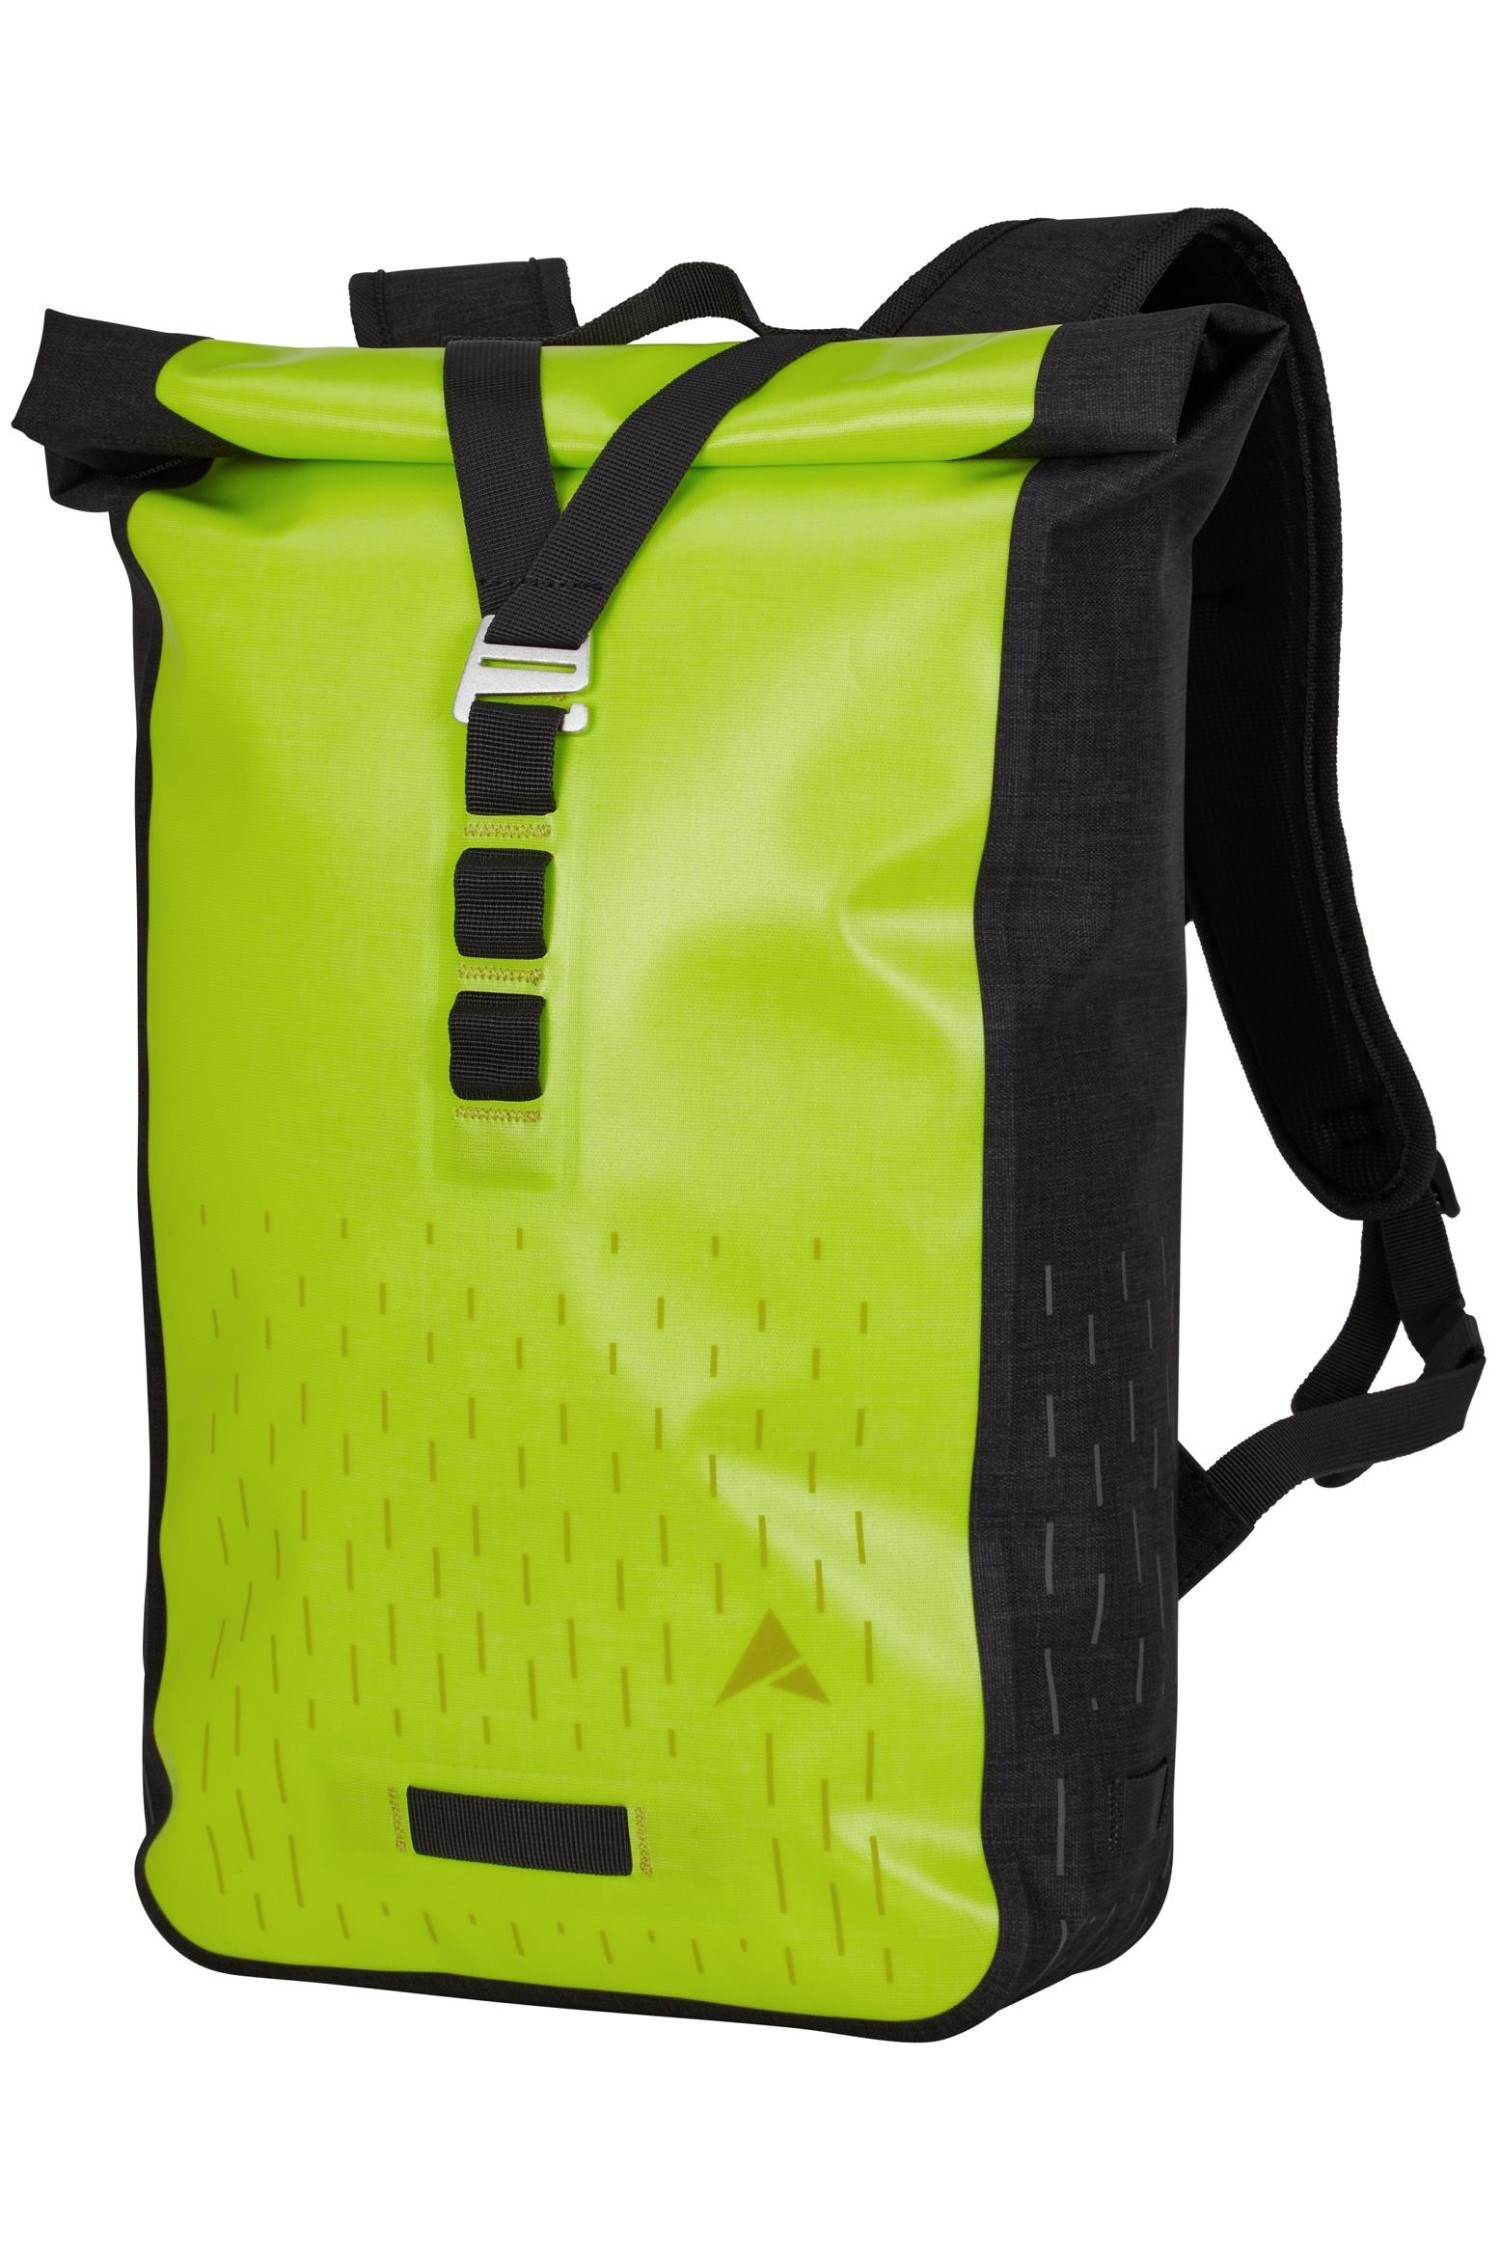 Thunderstorm City 20 Litre Waterproof Backpack -